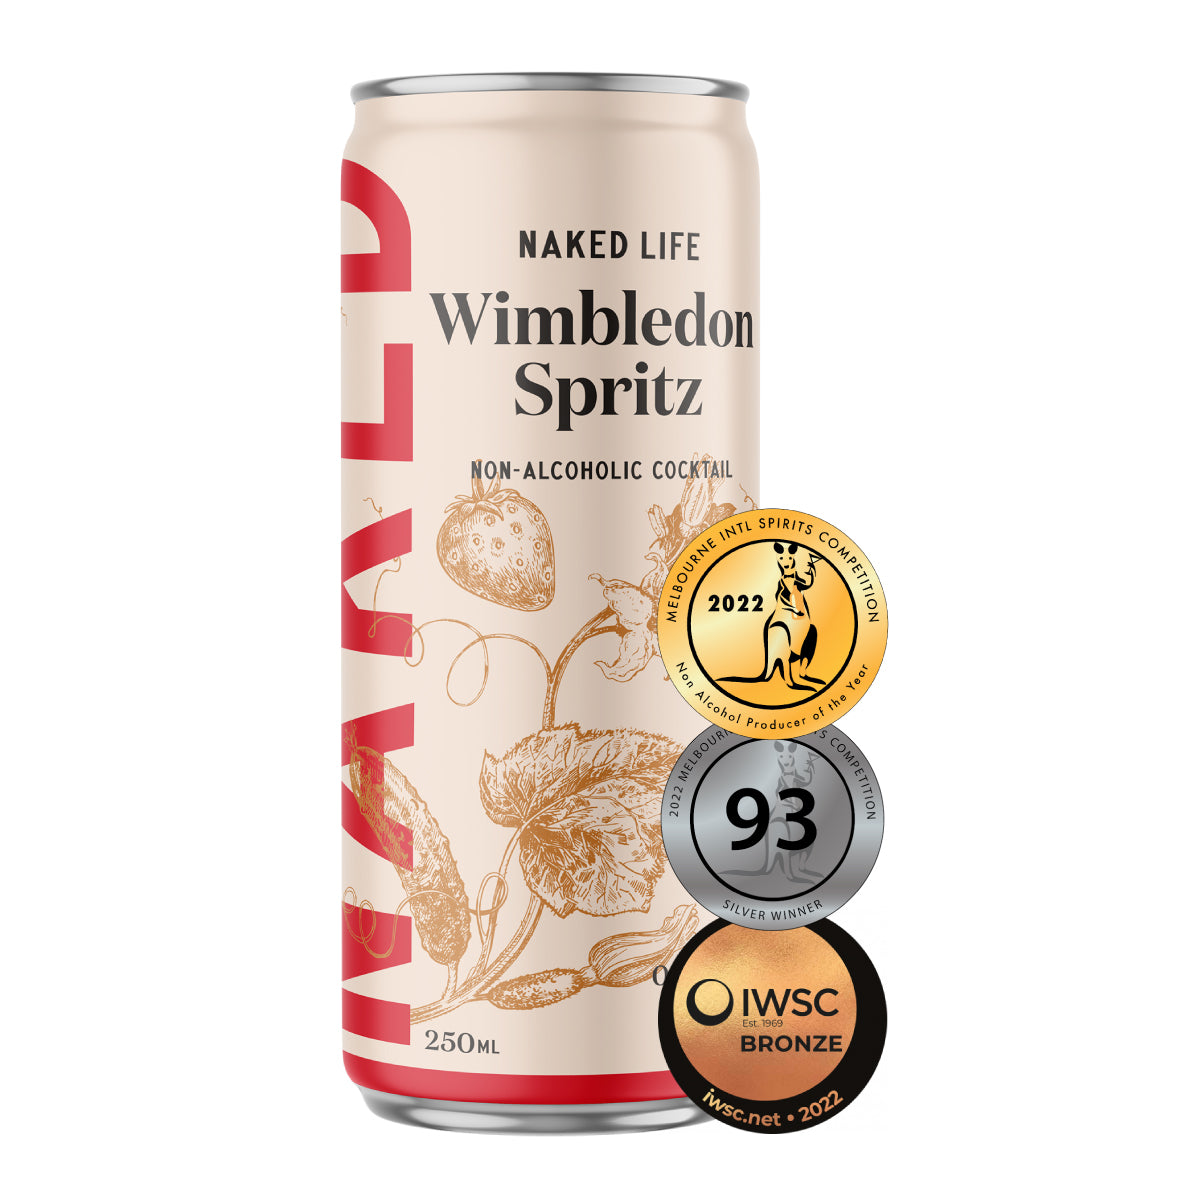 Naked Life Non-Alcoholic Cocktail Wimbledon Spritz - 6 x 4 x 250ml Cans